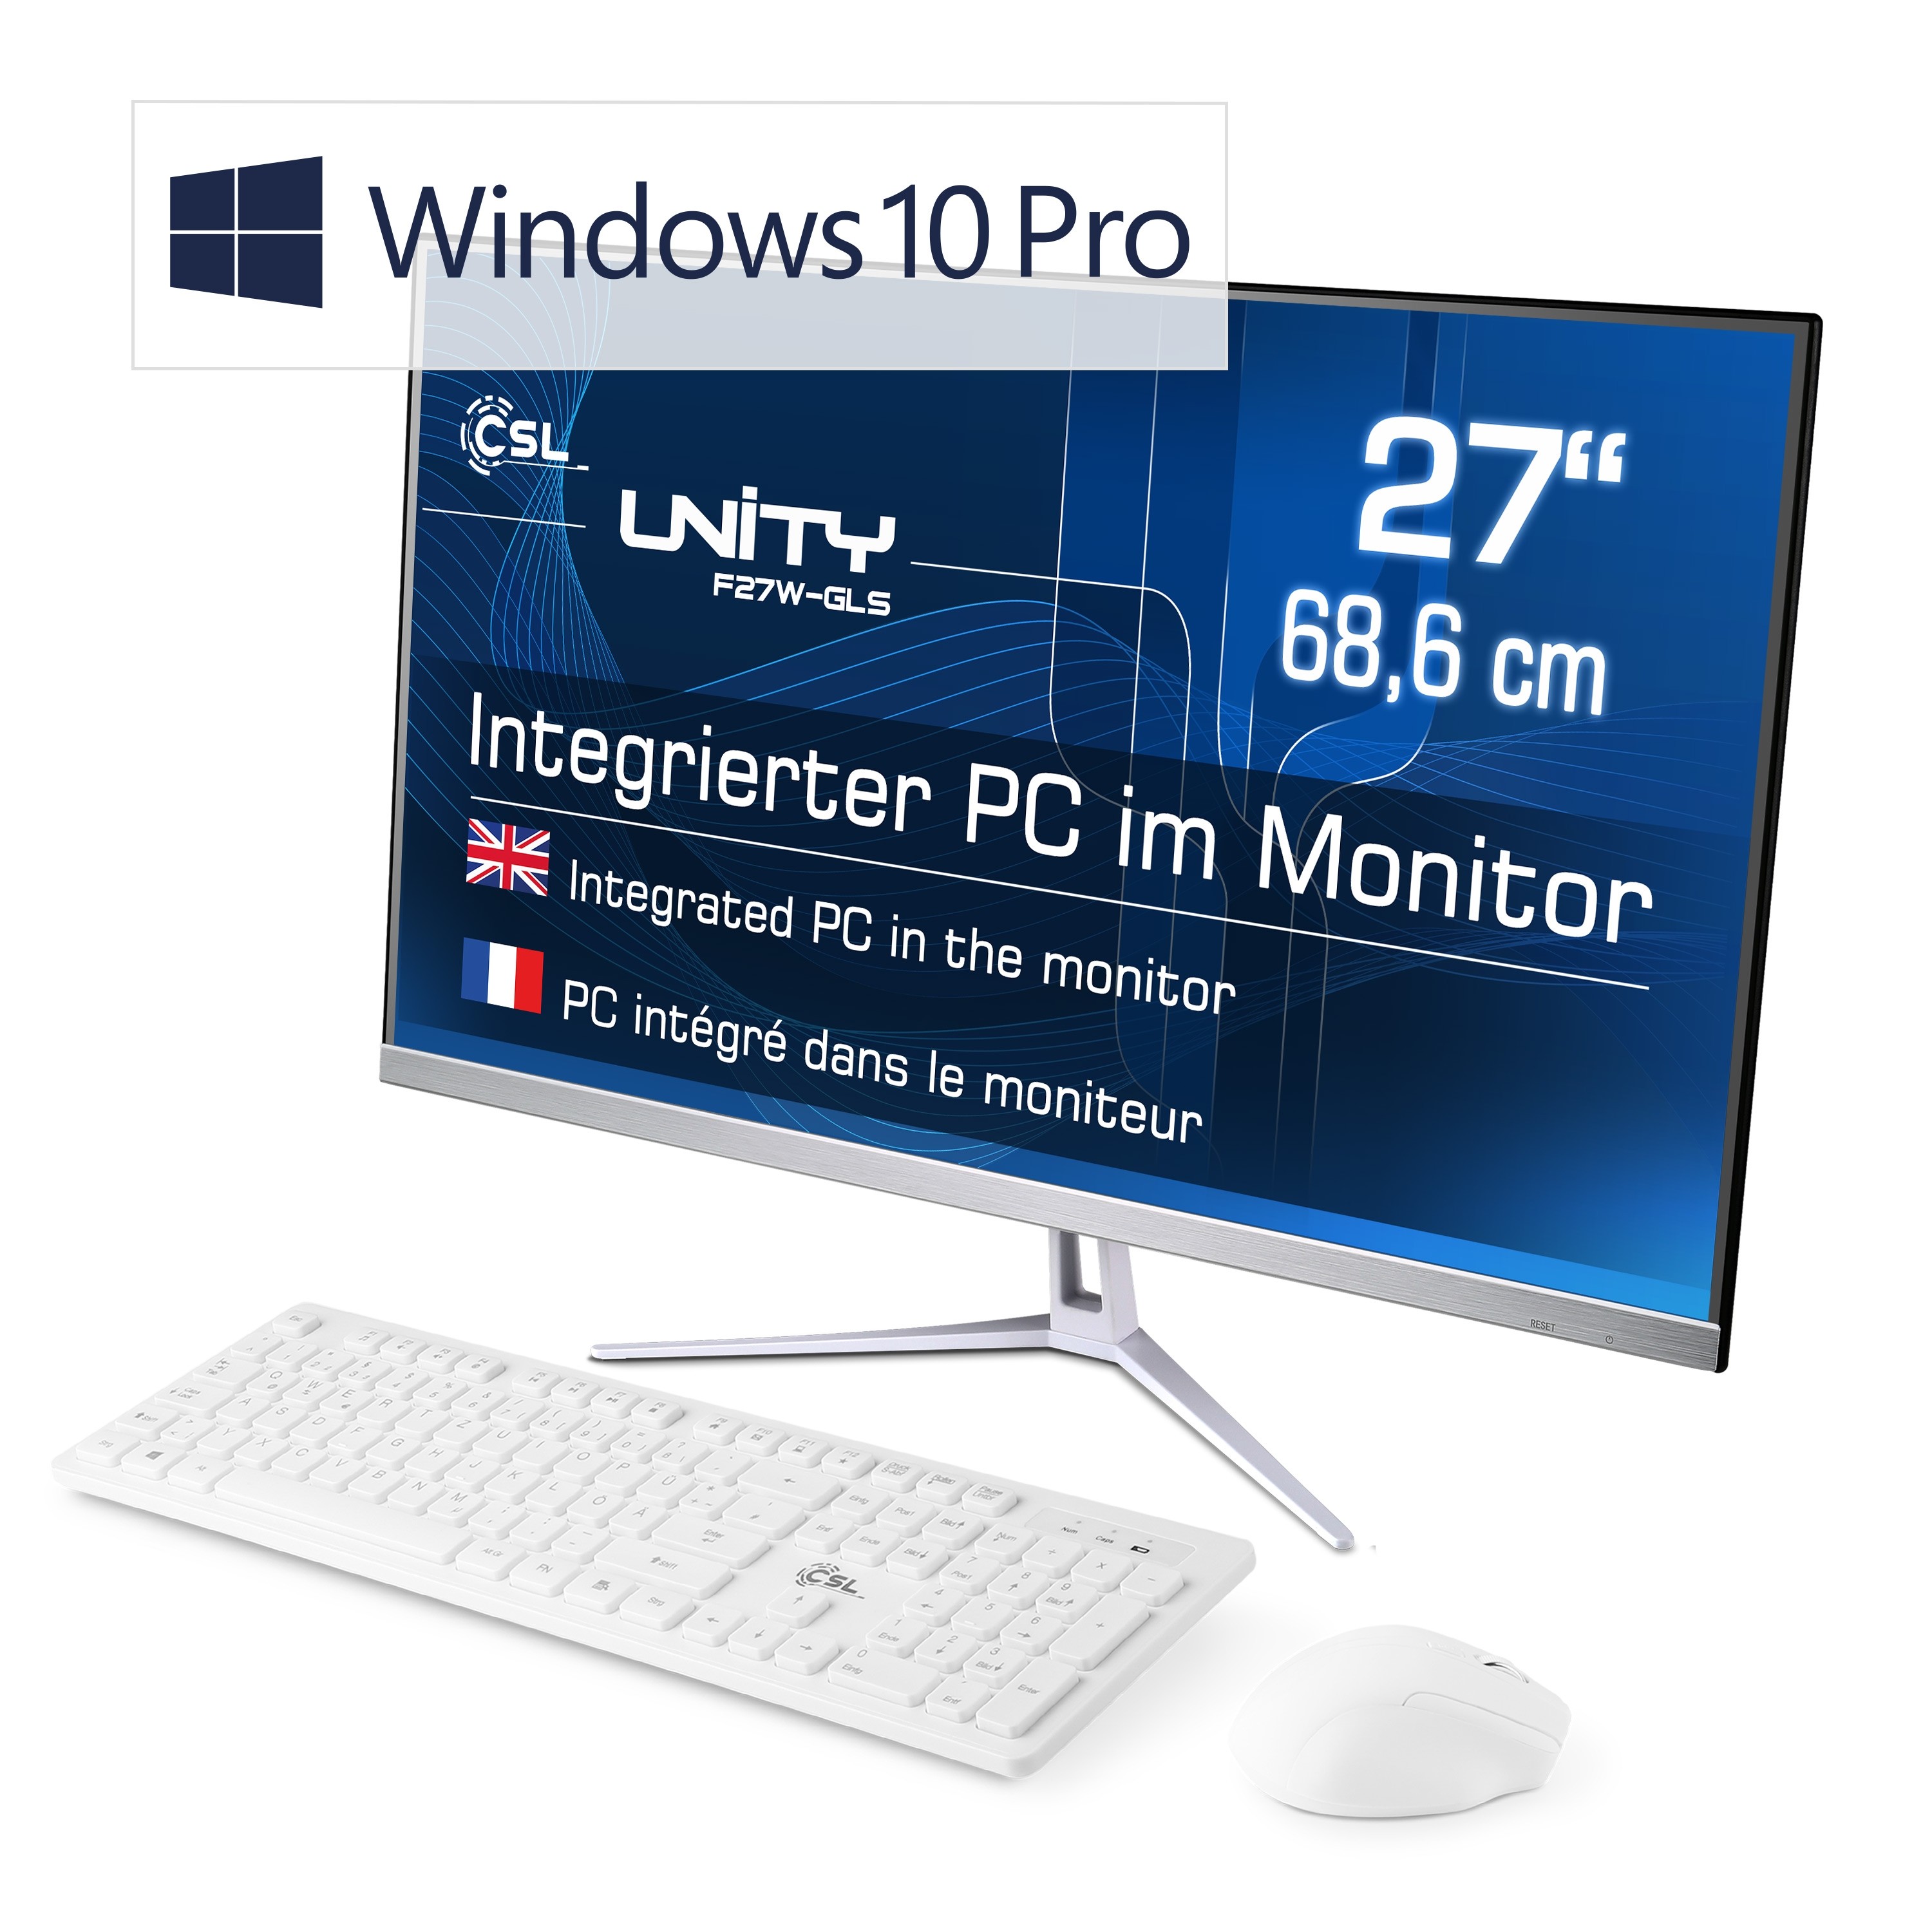 16　Windows　GB　Unity　CSL　Pro　Computer　CSL　1000　All-in-One-PC　F27W-GLS　10　GB　RAM